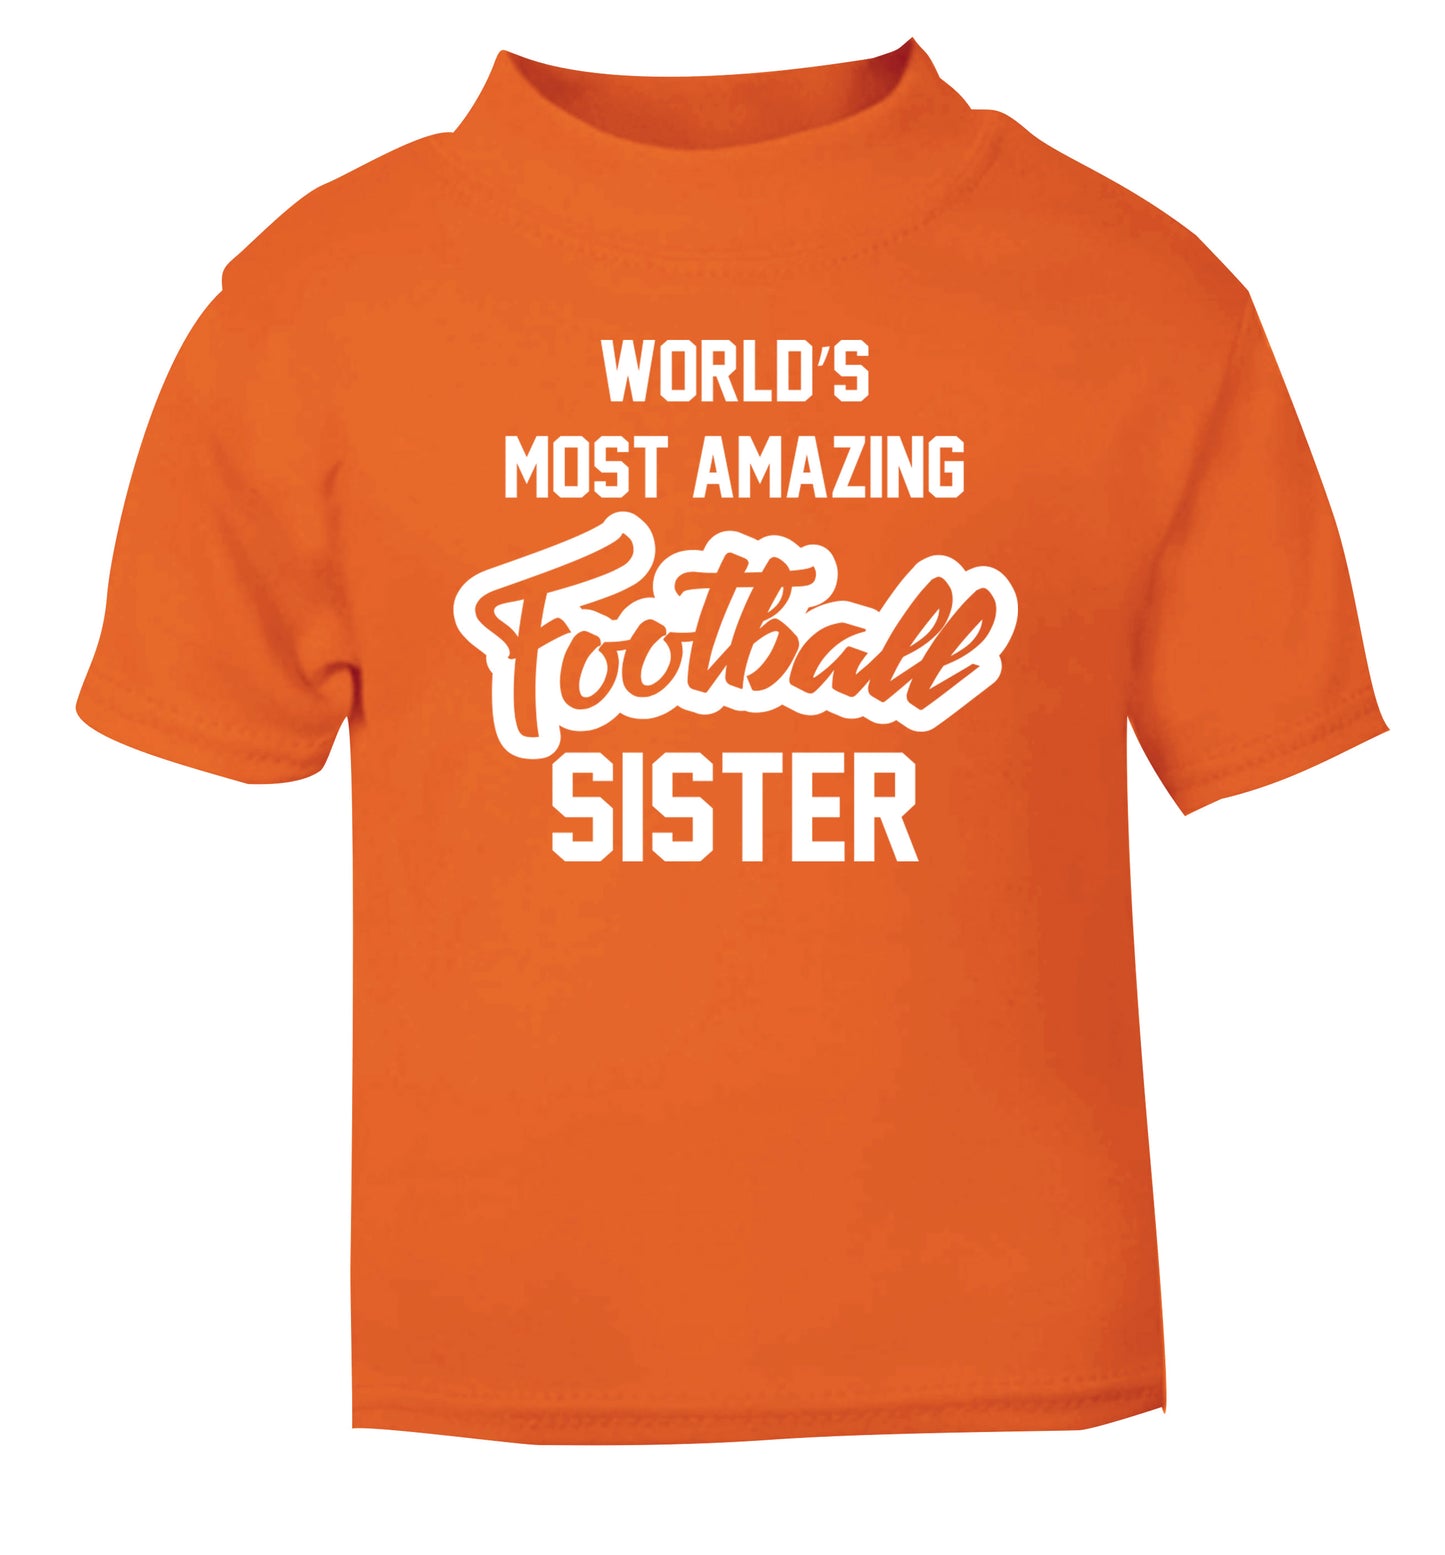 Worlds most amazing football sister orange Baby Toddler Tshirt 2 Years